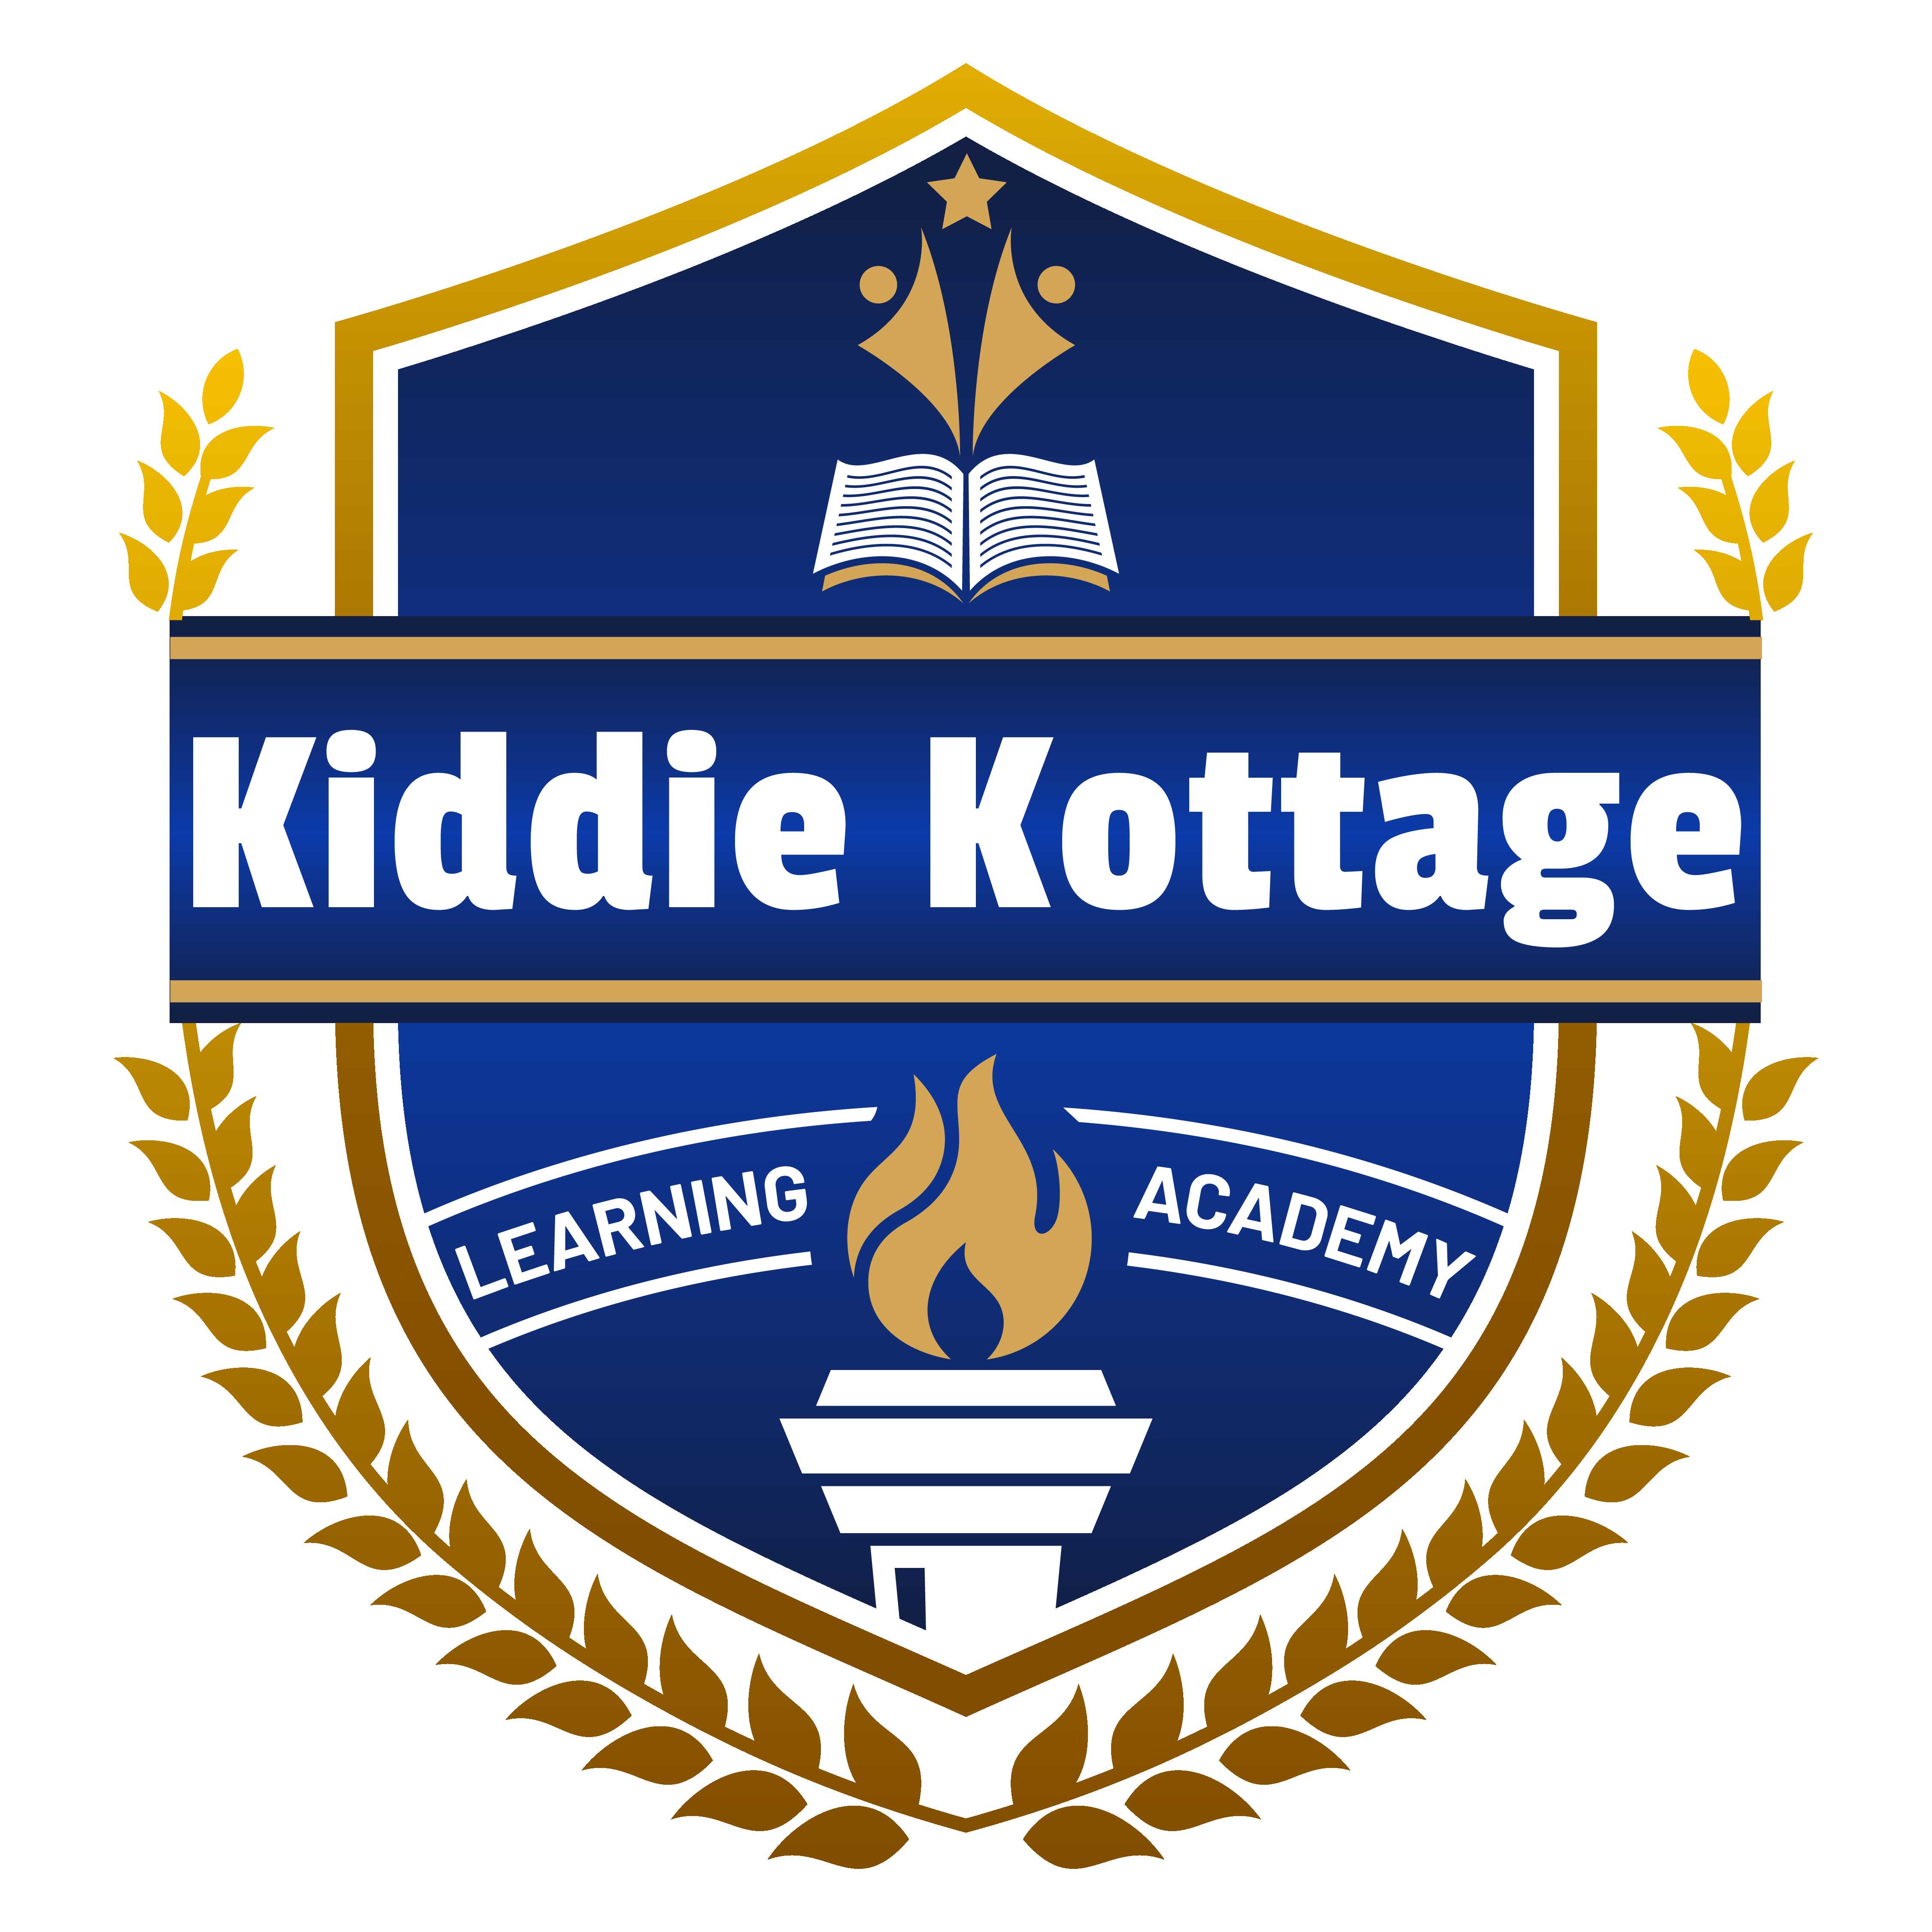 Kiddie Kottage Learning